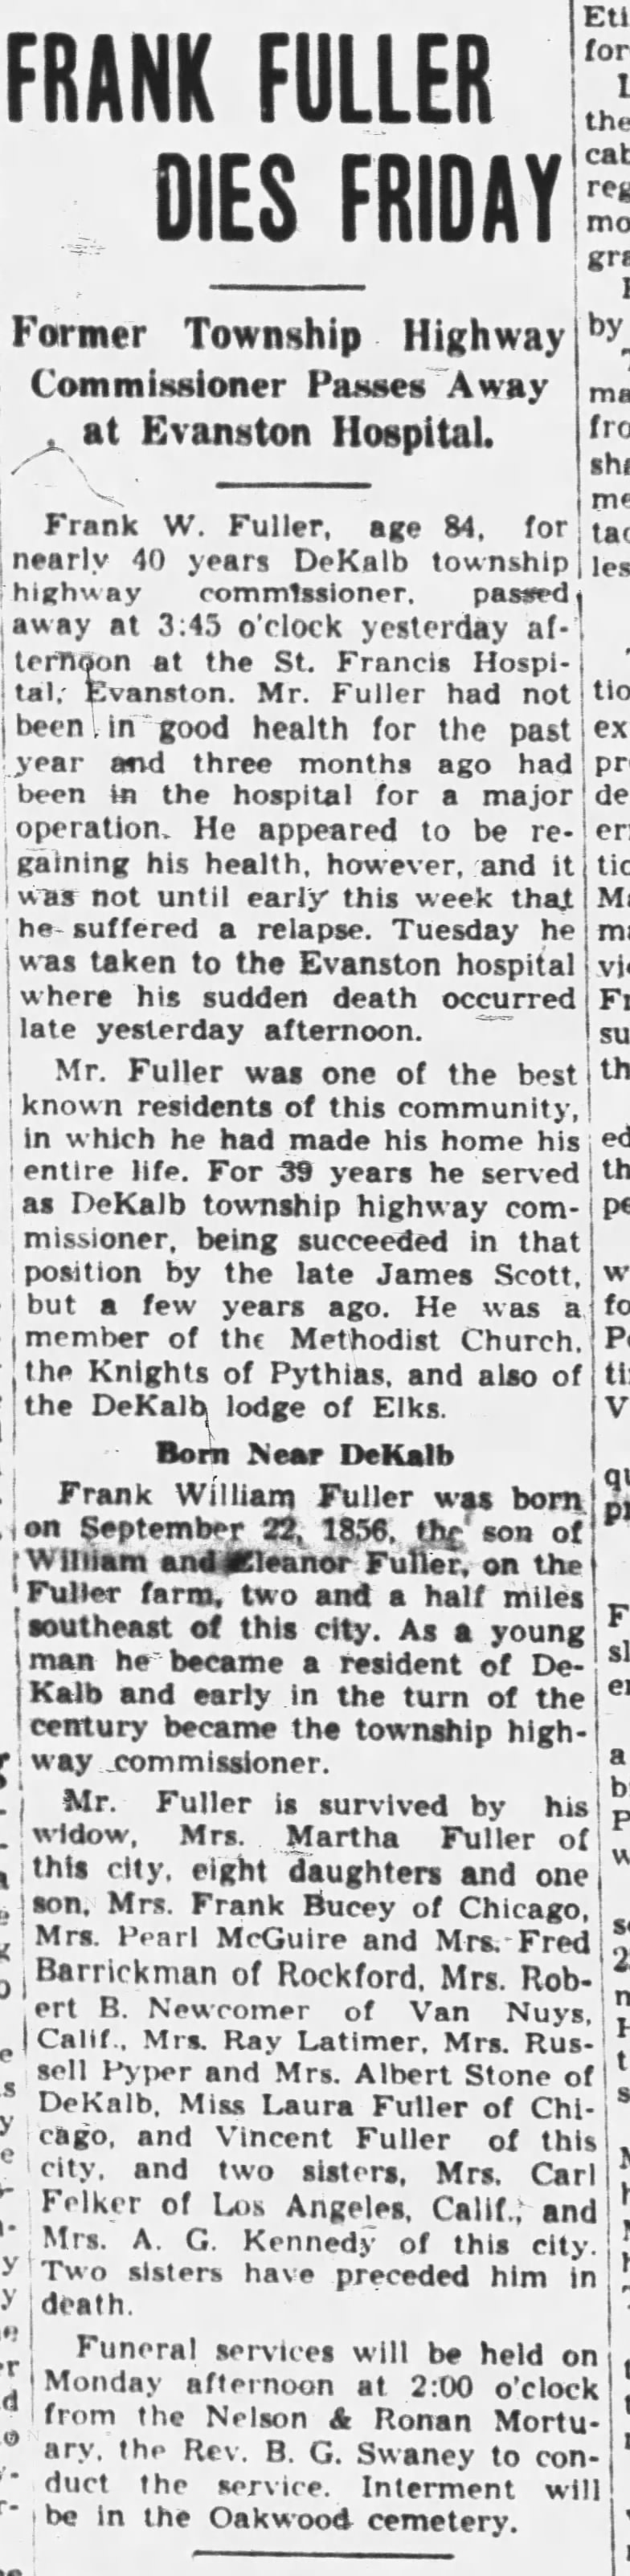 Obituary: Frank William FULLER (Aged 84)